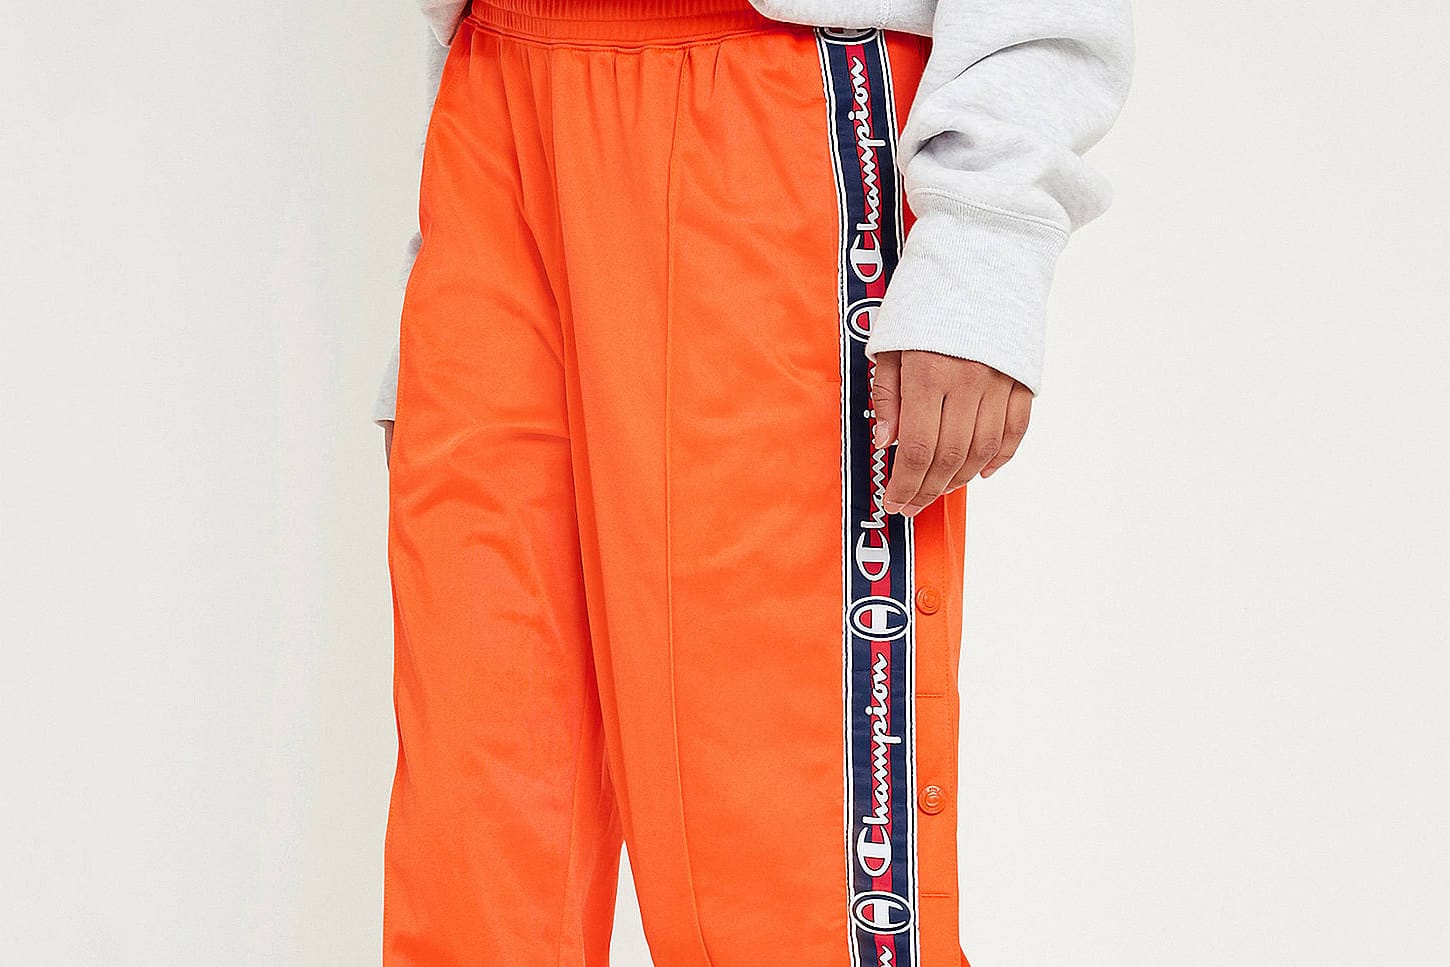 champion orange pants